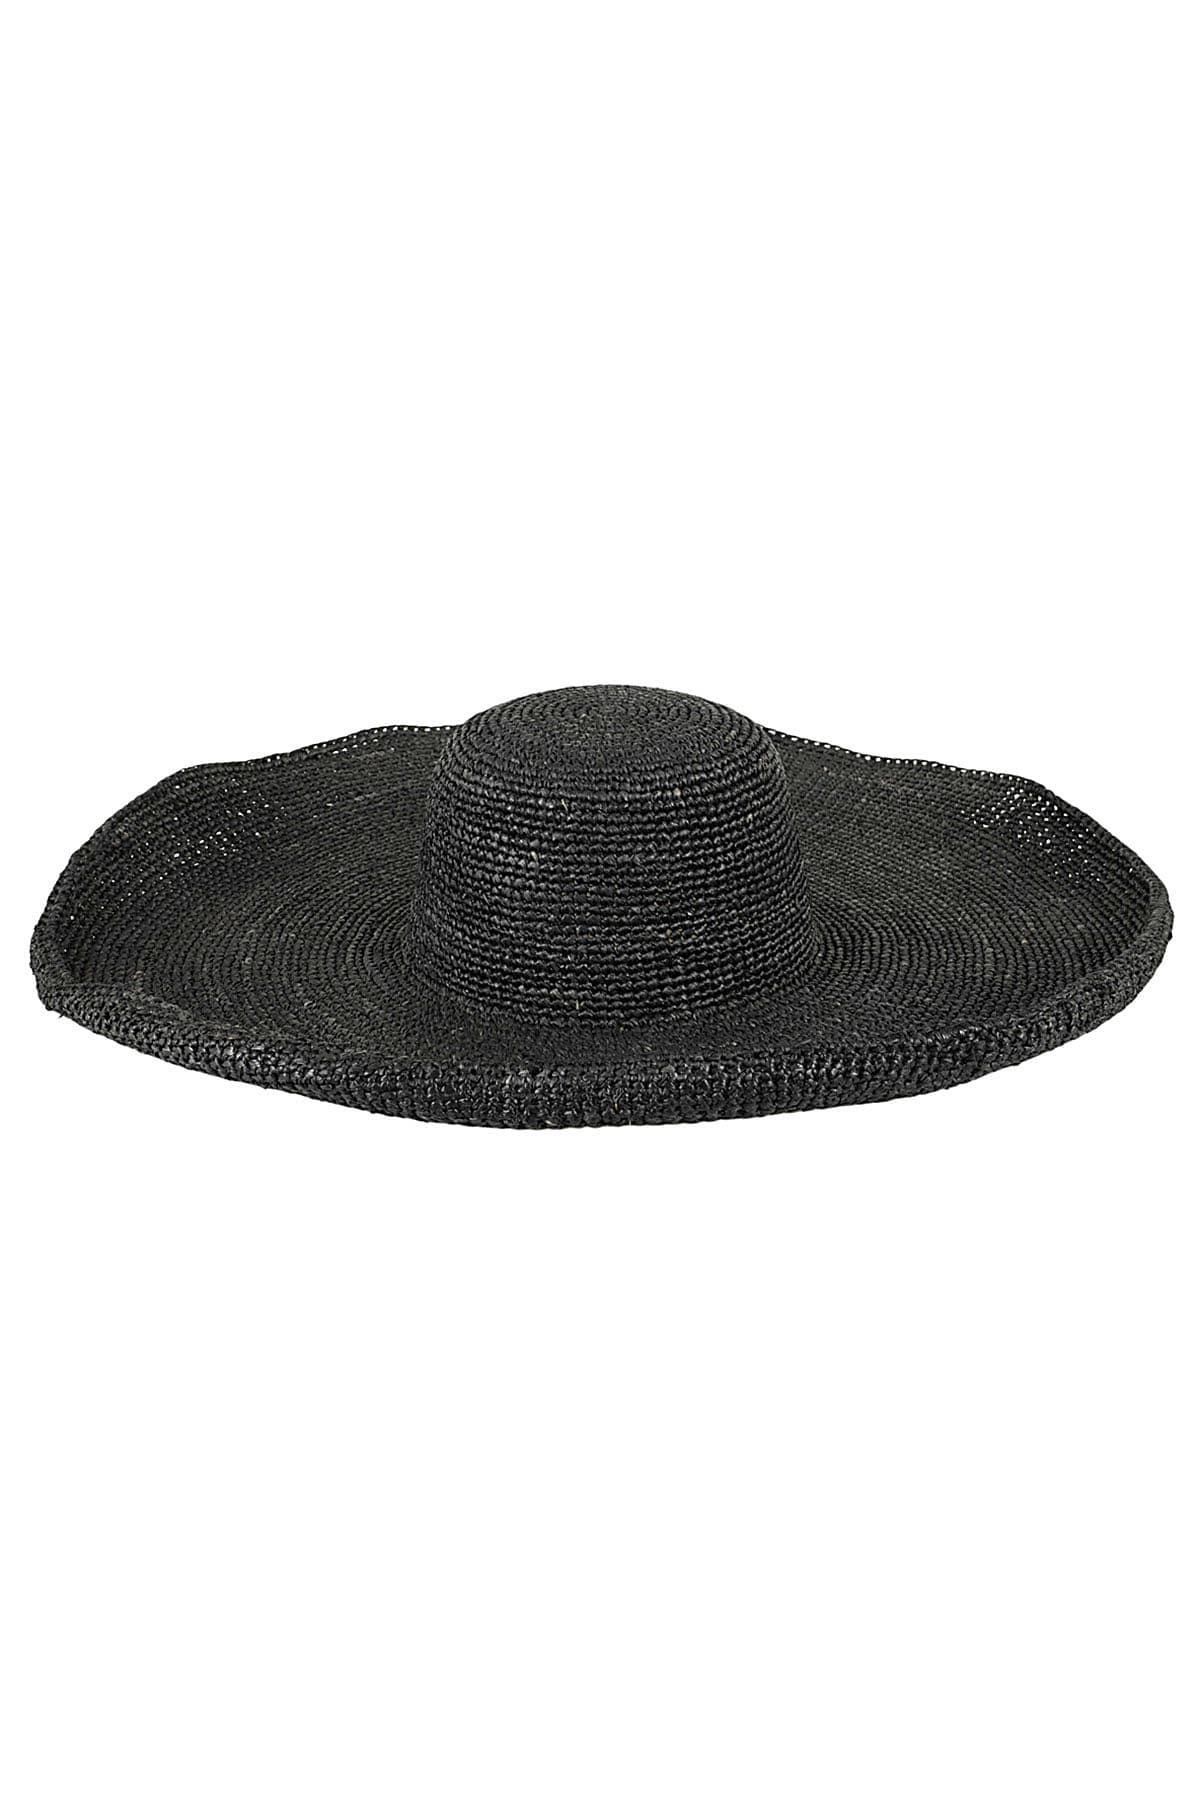 Ibeliv Hat